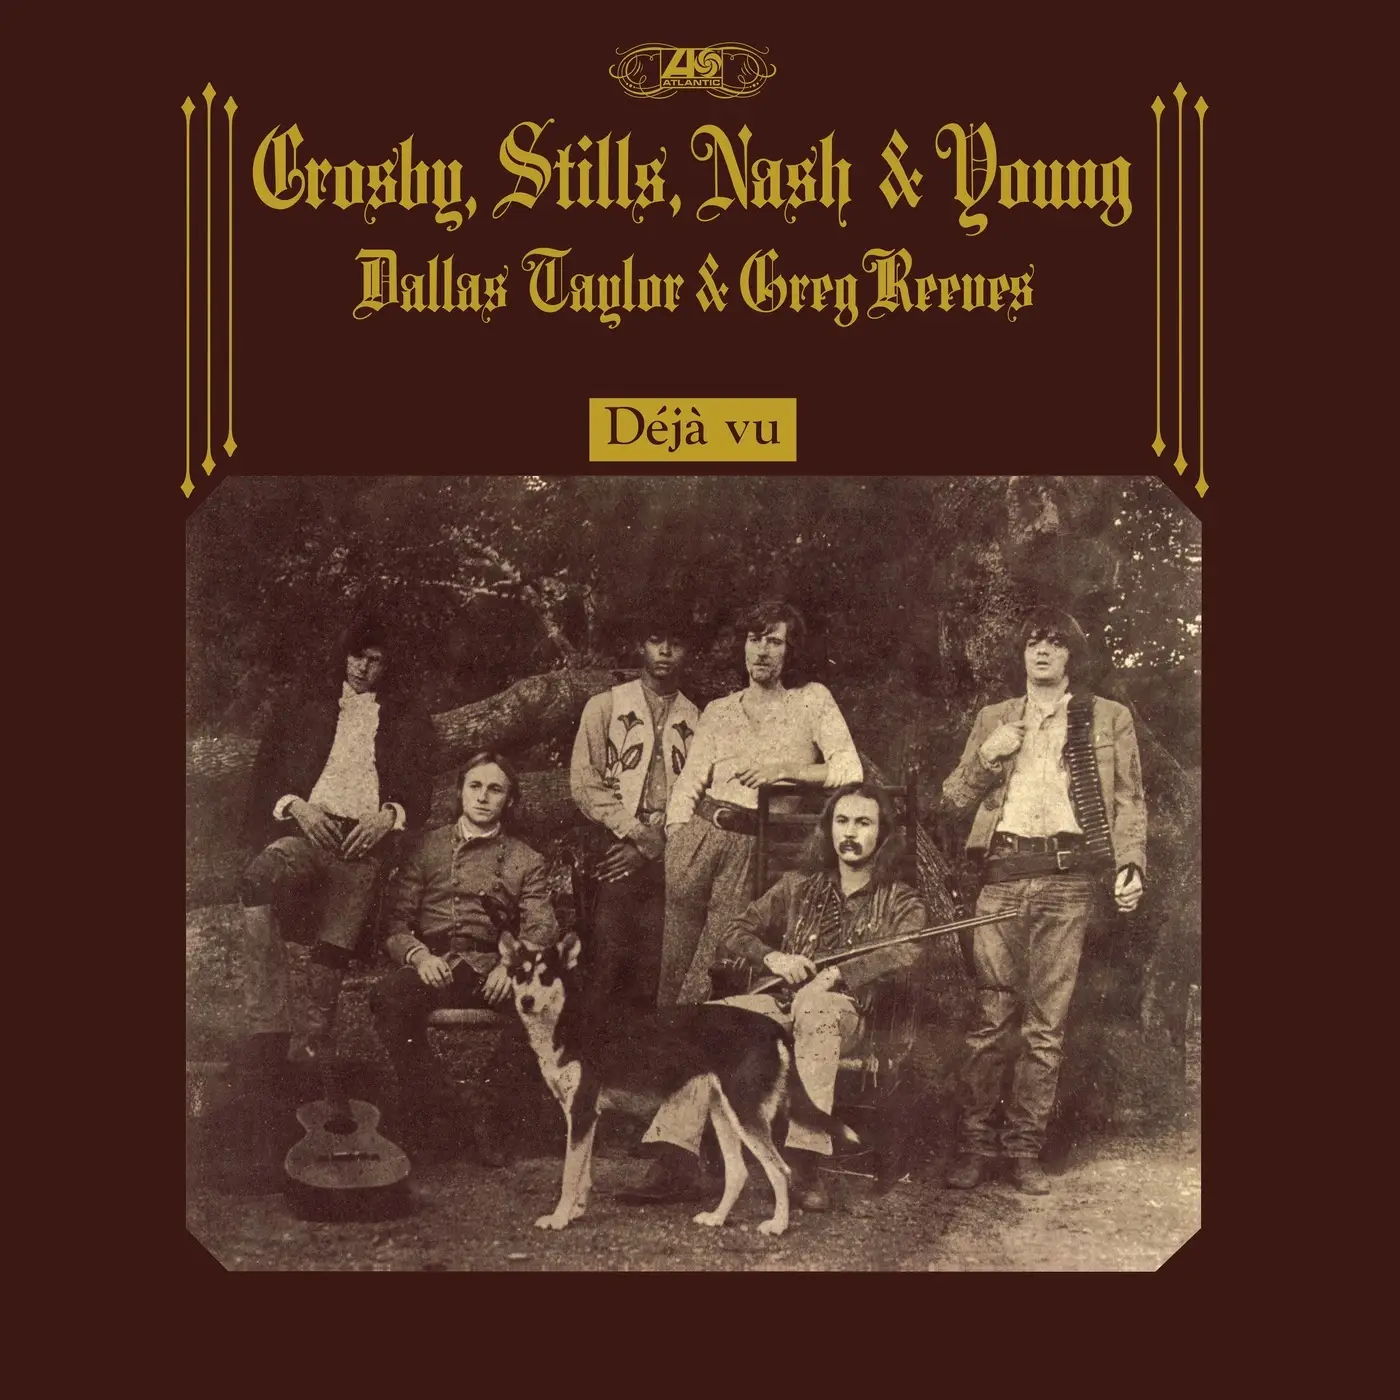 crosby-stills-nash-young-d-j-vu-50th-anniversary-deluxe-edition